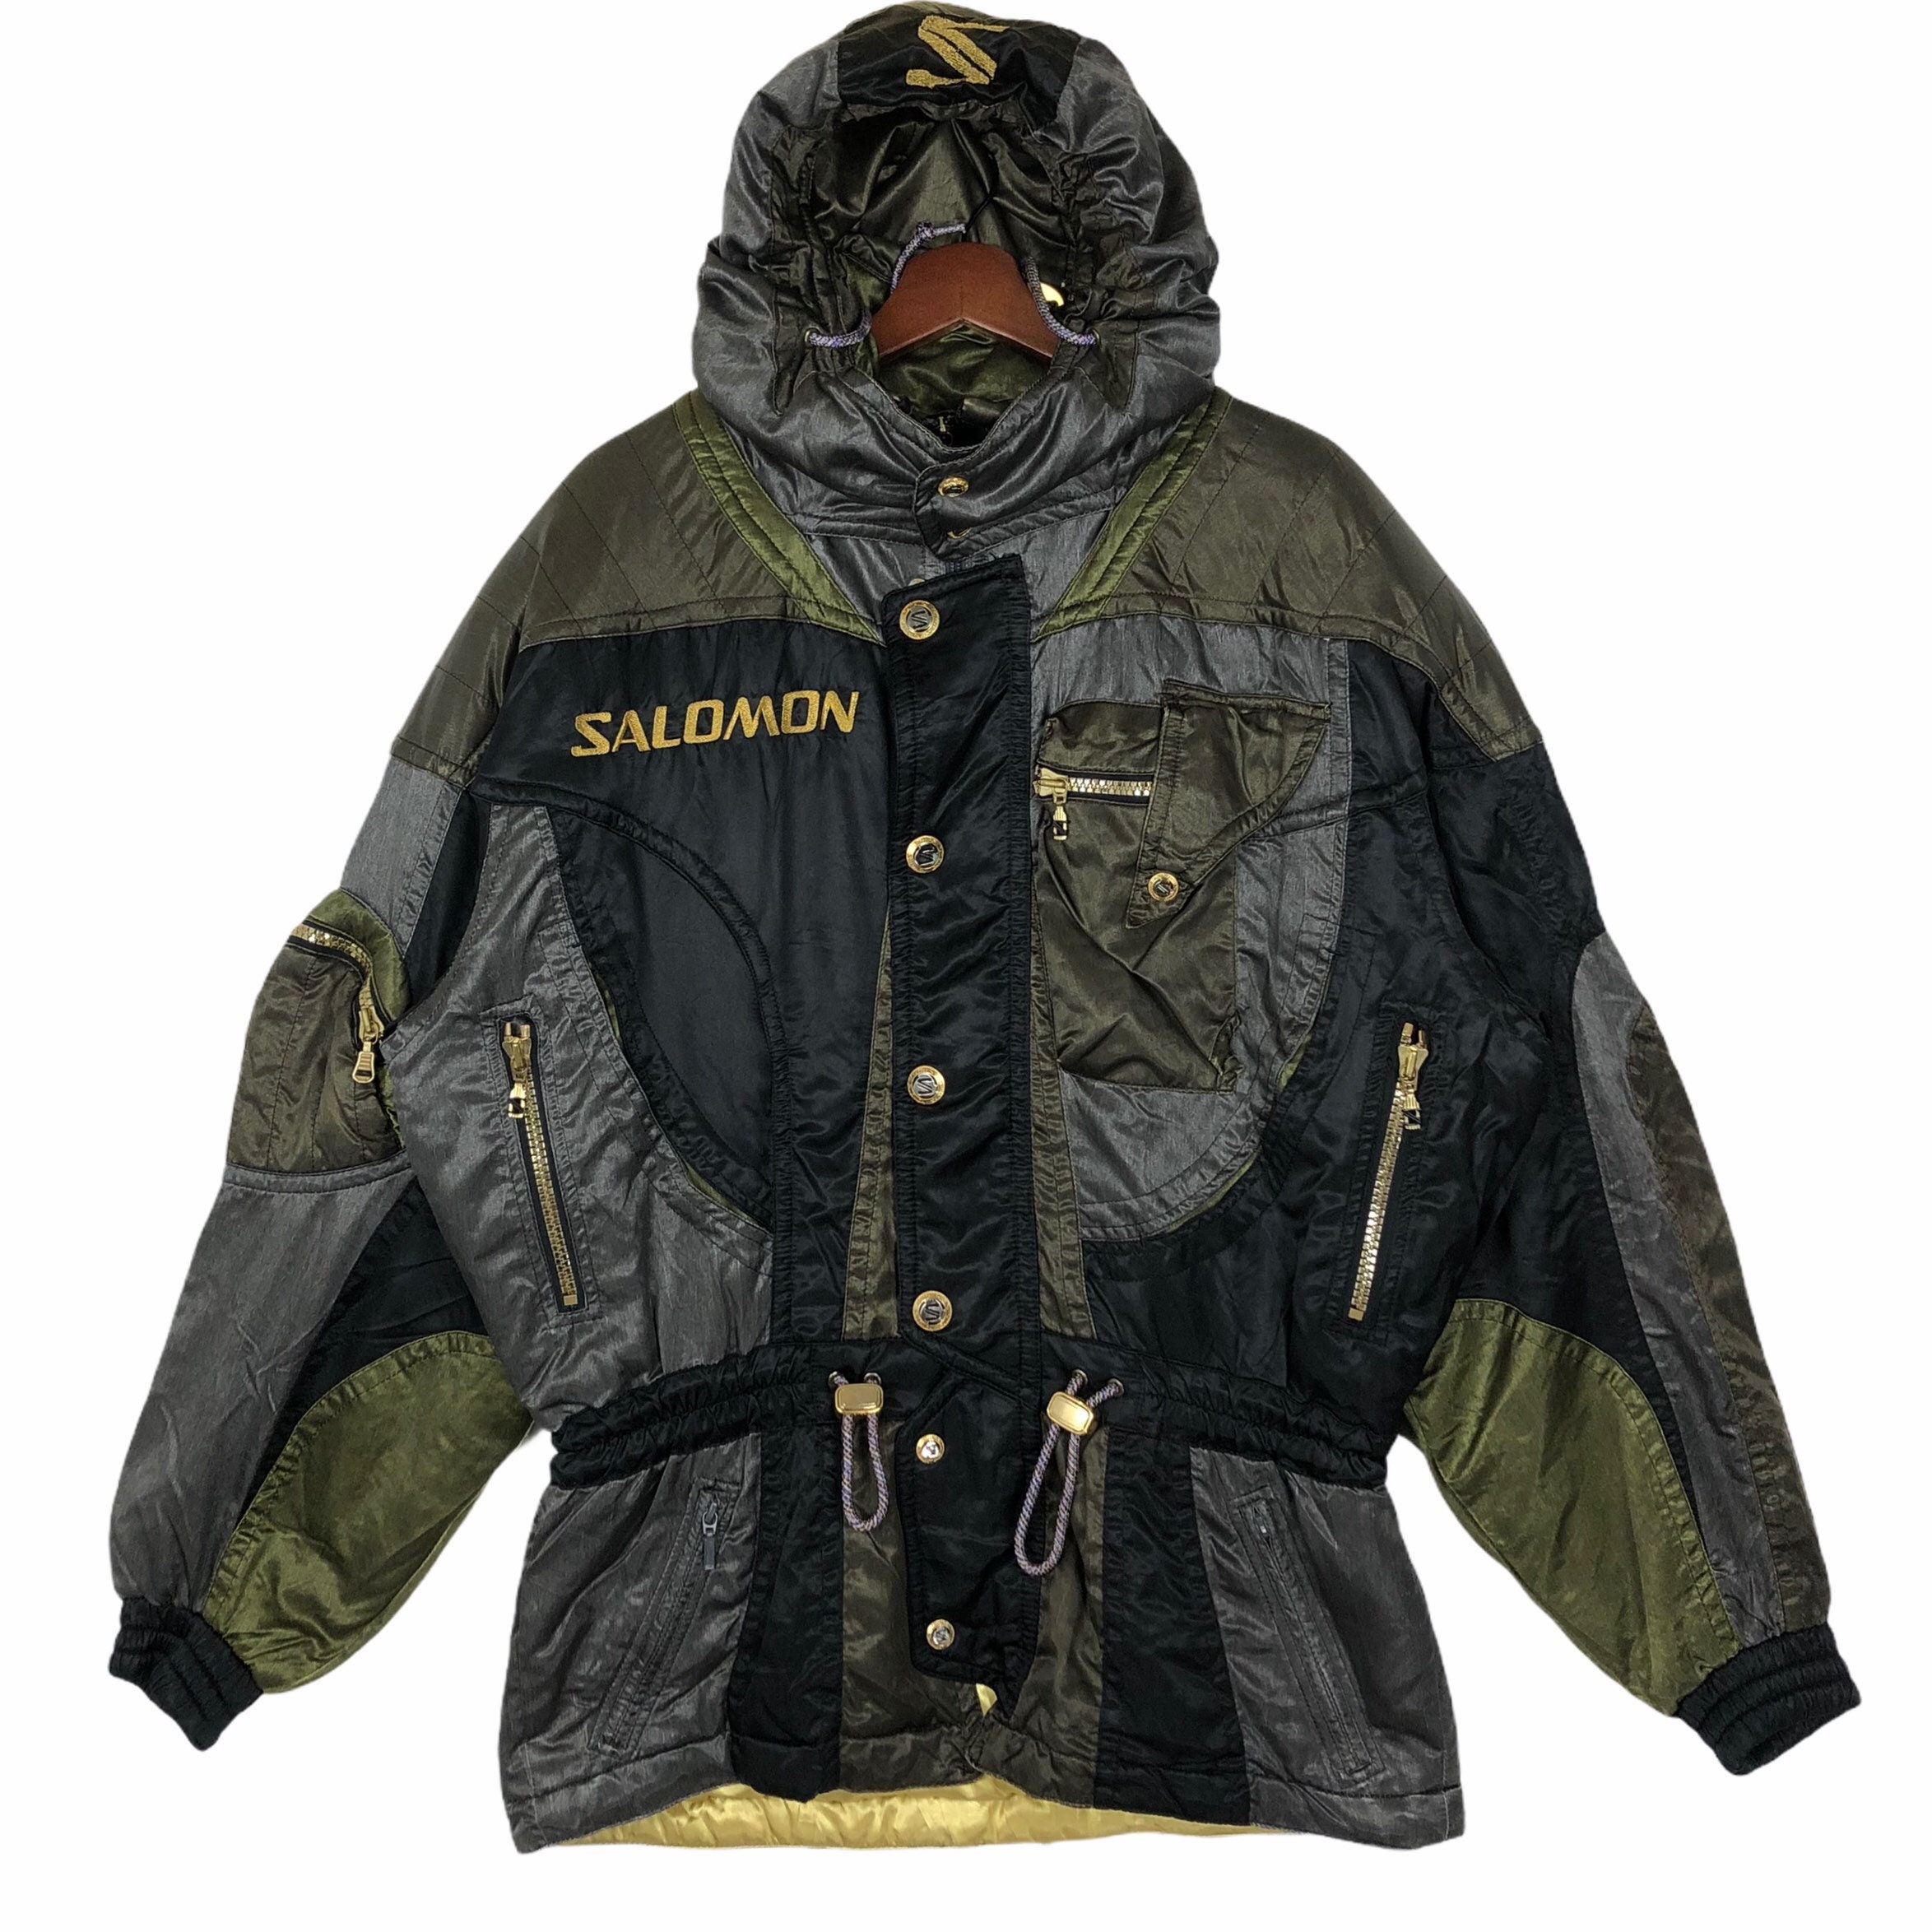 klok emmer Opnemen Salomon Ski & Snowboard Jacket Expert Collection Winter - Etsy